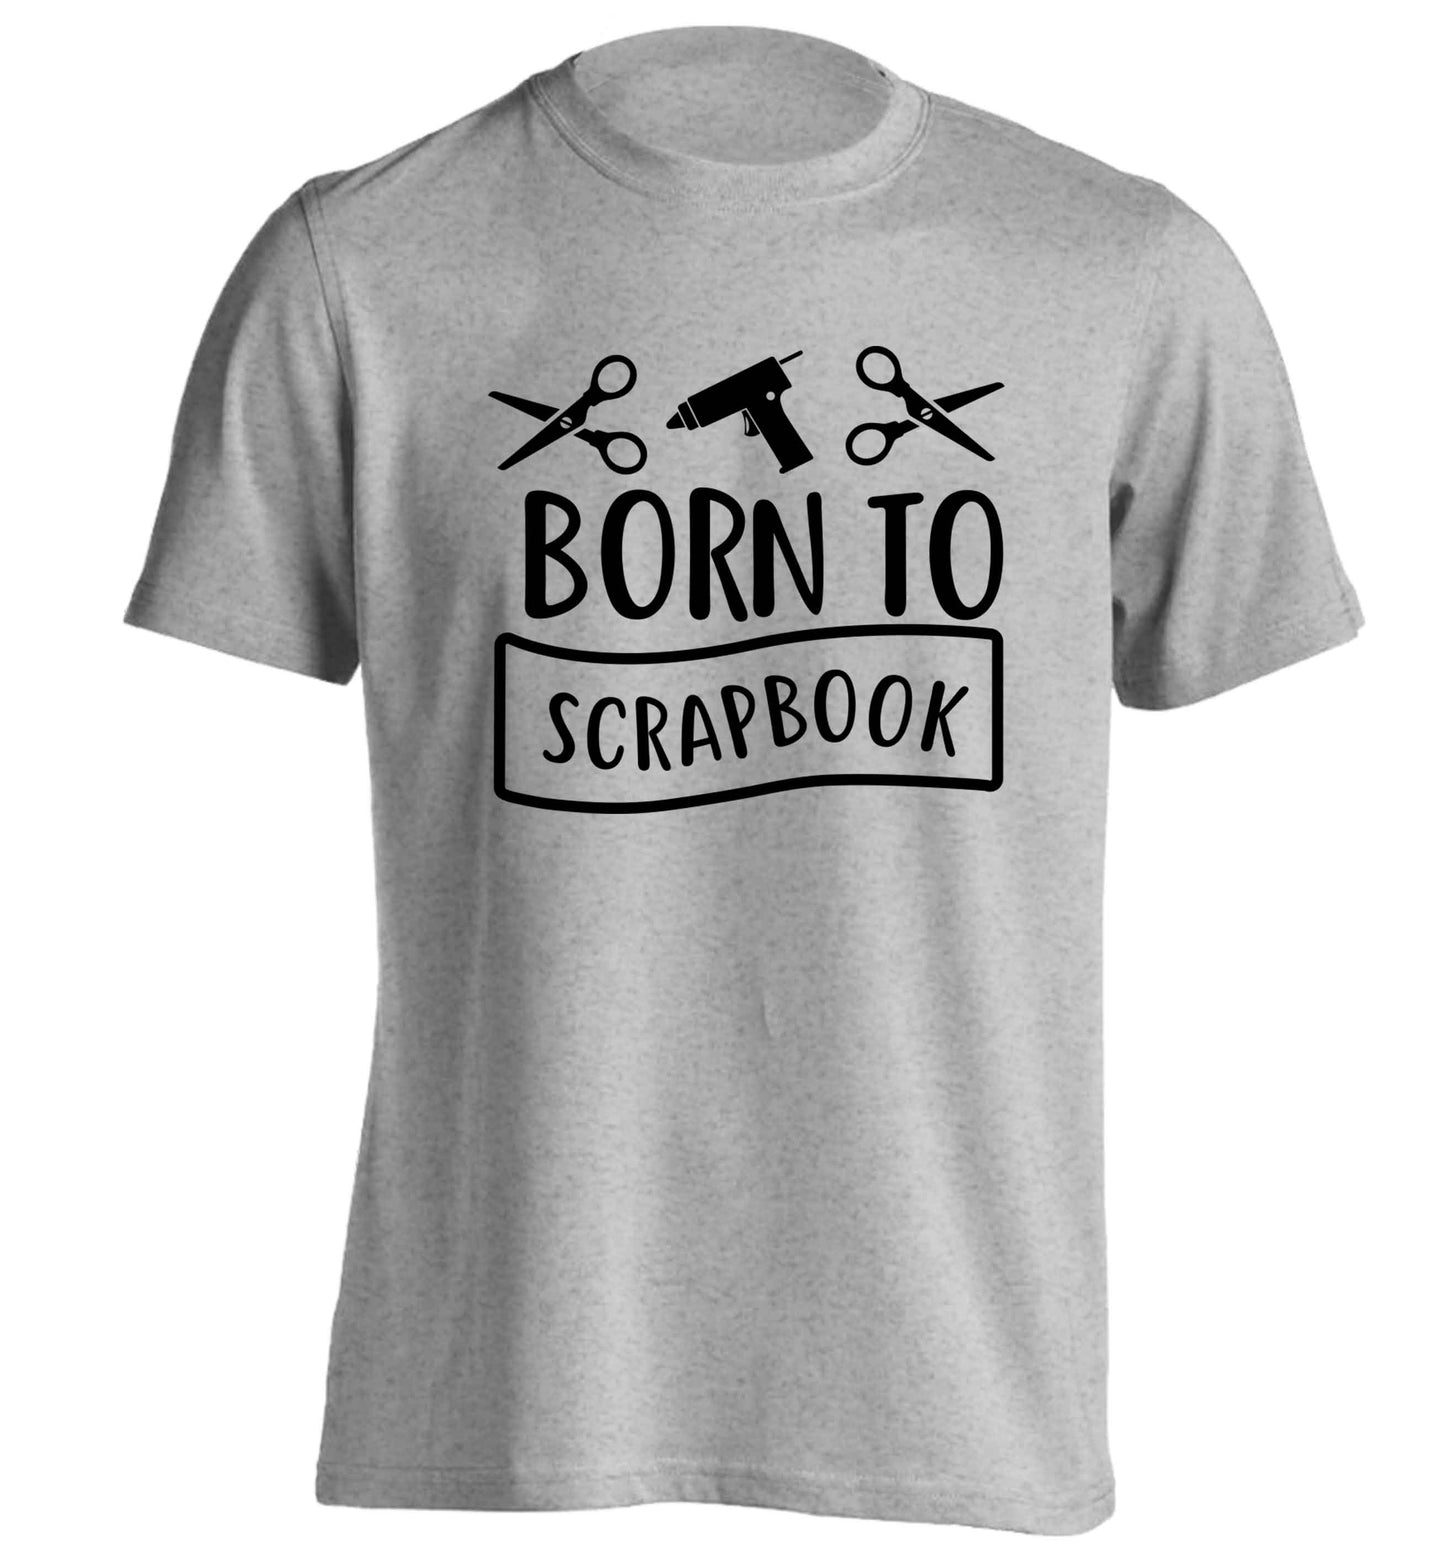 Born to scrapbook adults unisex grey Tshirt 2XL